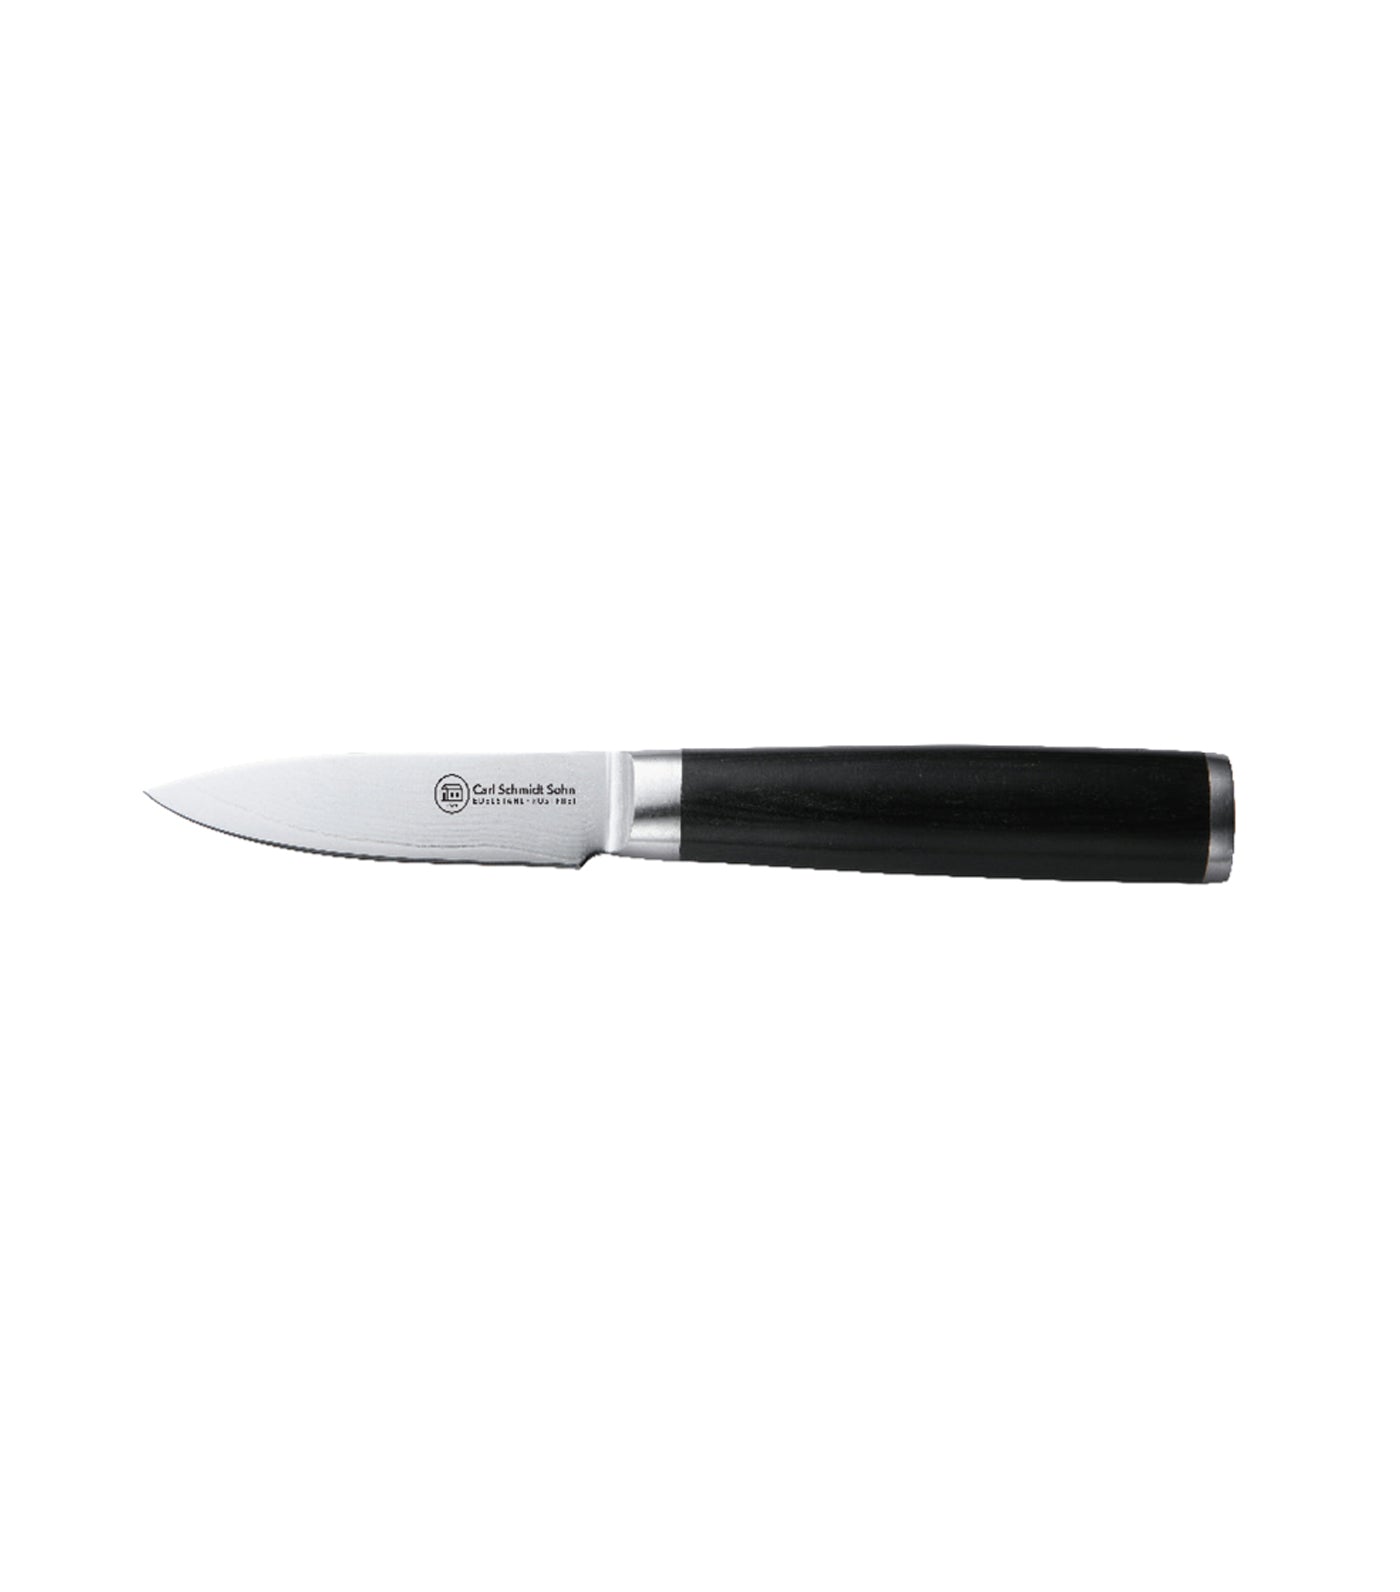 Carl Schmidt Sohn 6pcs Knife set with Wooden Knife Block buy to Saint  Helena. CosmoStore Saint Helena